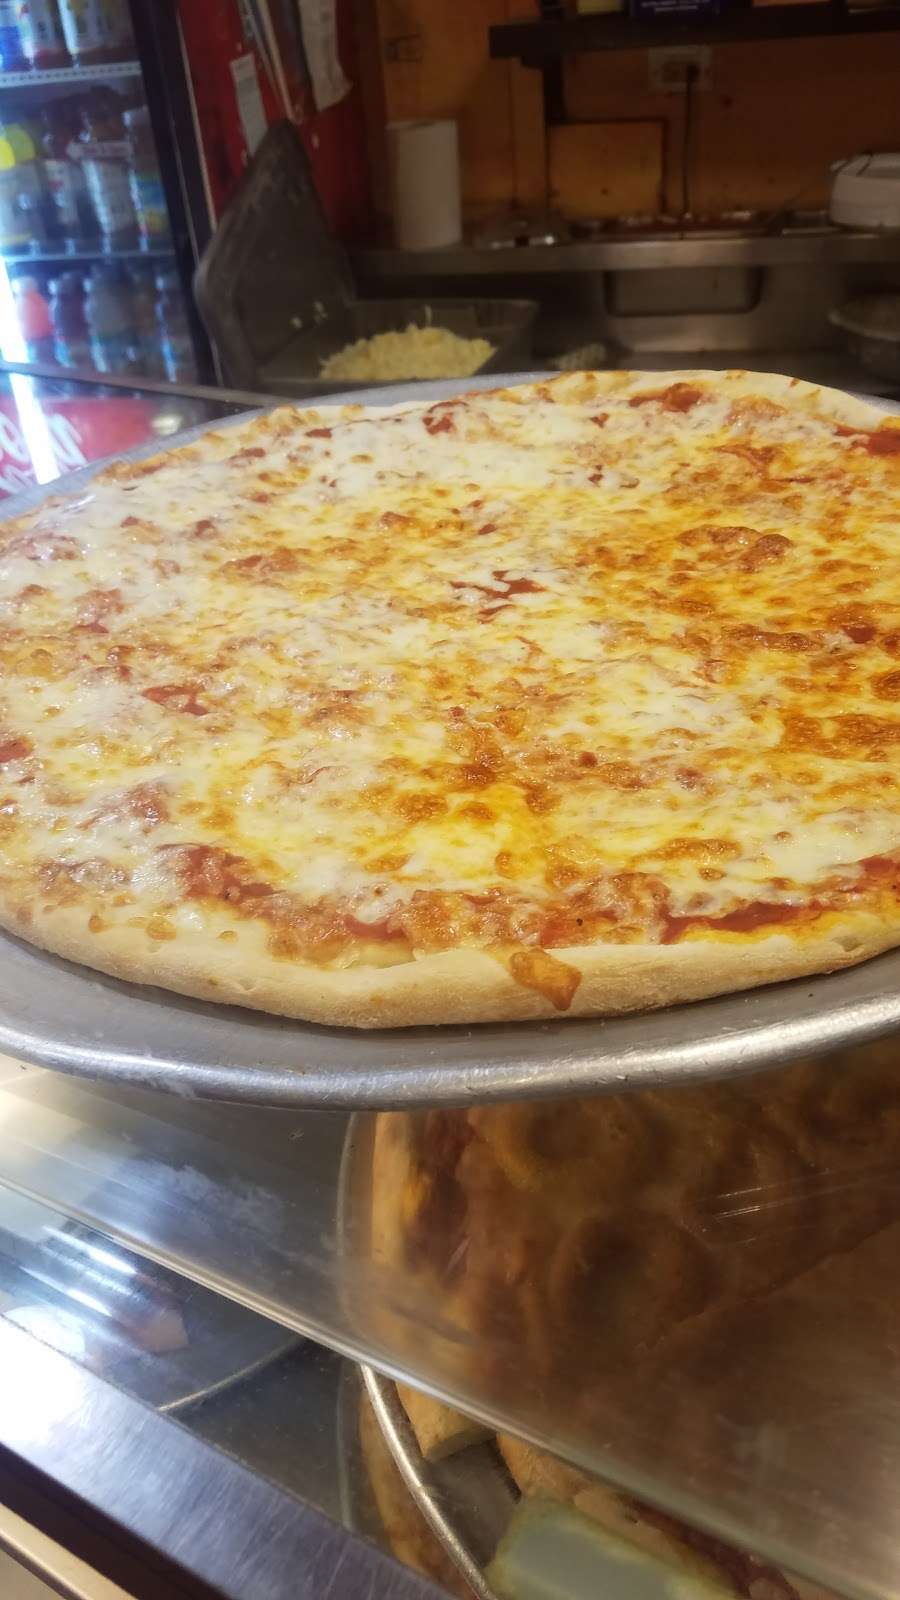 Grandmas Pizza | 2551 Amsterdam Ave, New York, NY 10033, USA | Phone: (212) 927-4895